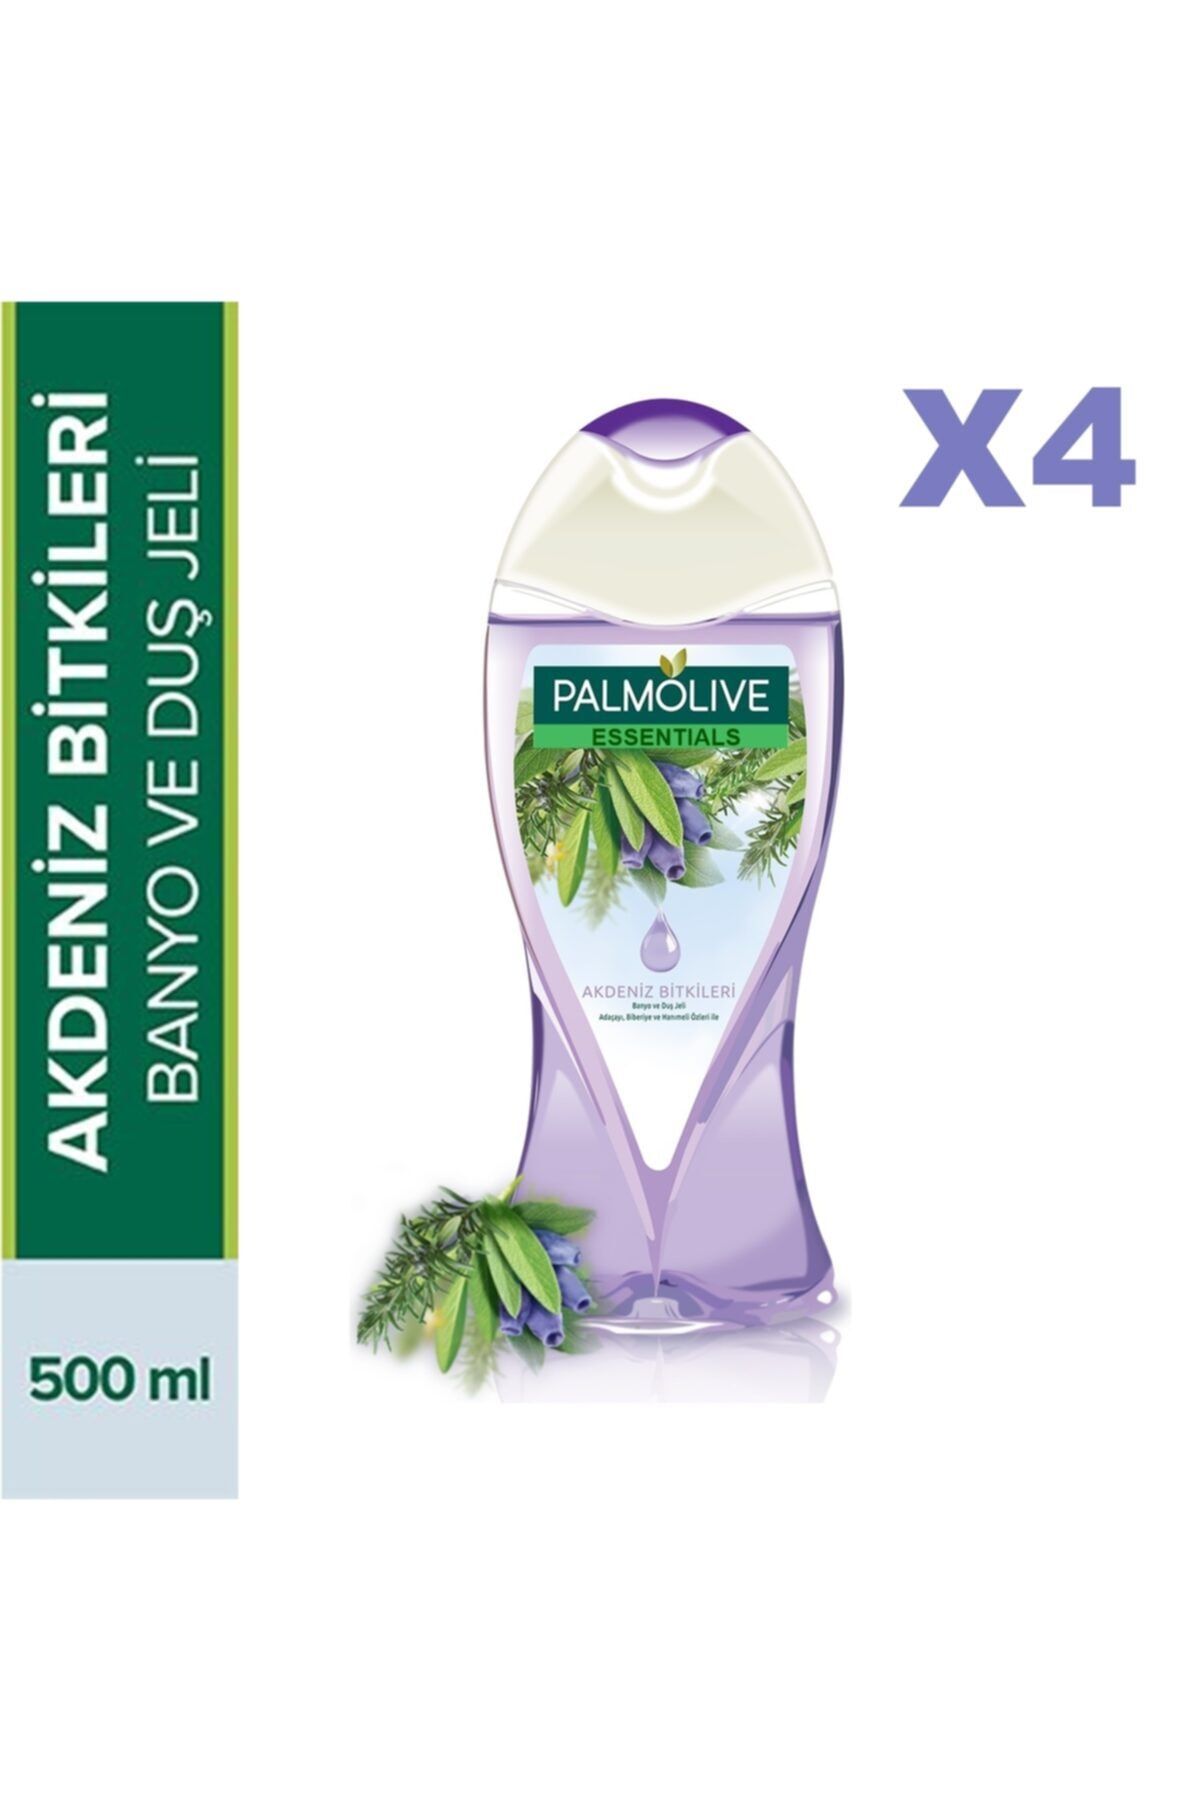 Palmolive Essentials Mediterranean Herbs Akdeniz Bitkileri Duş Jeli 500 Ml 4'lü Set